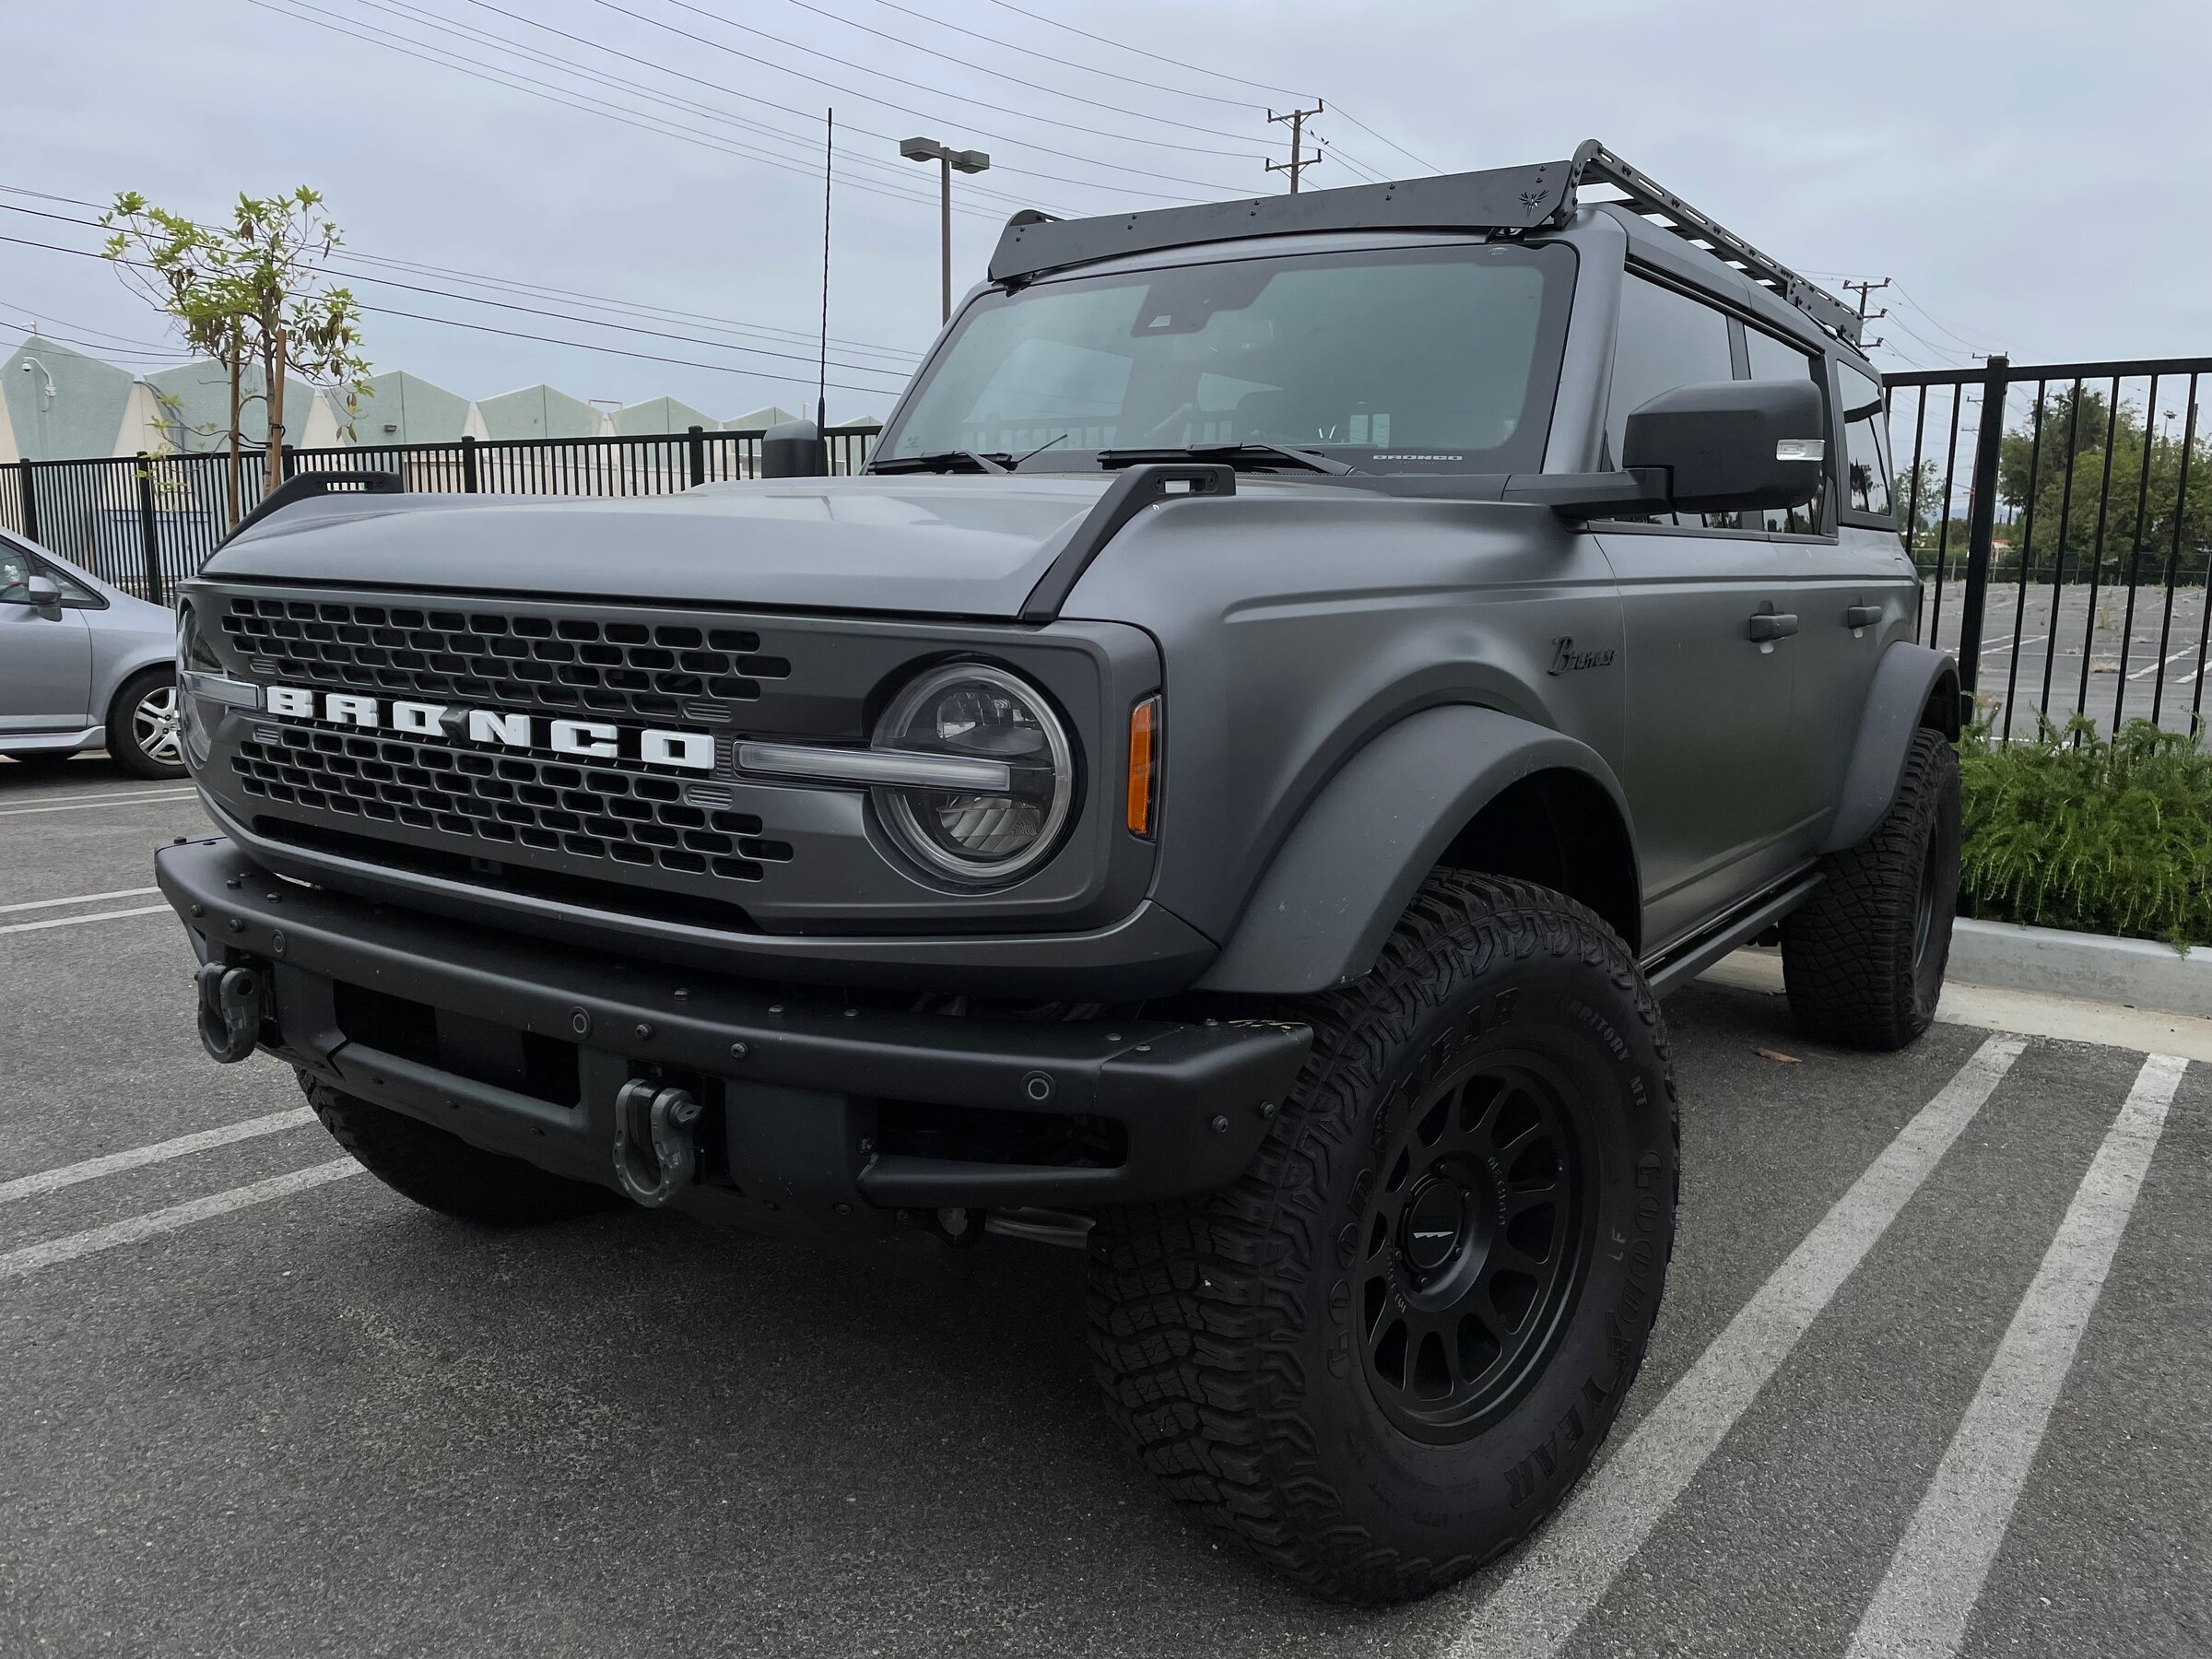 Ford Bronco Project “Terminator Bronco” overland build IMG_0098